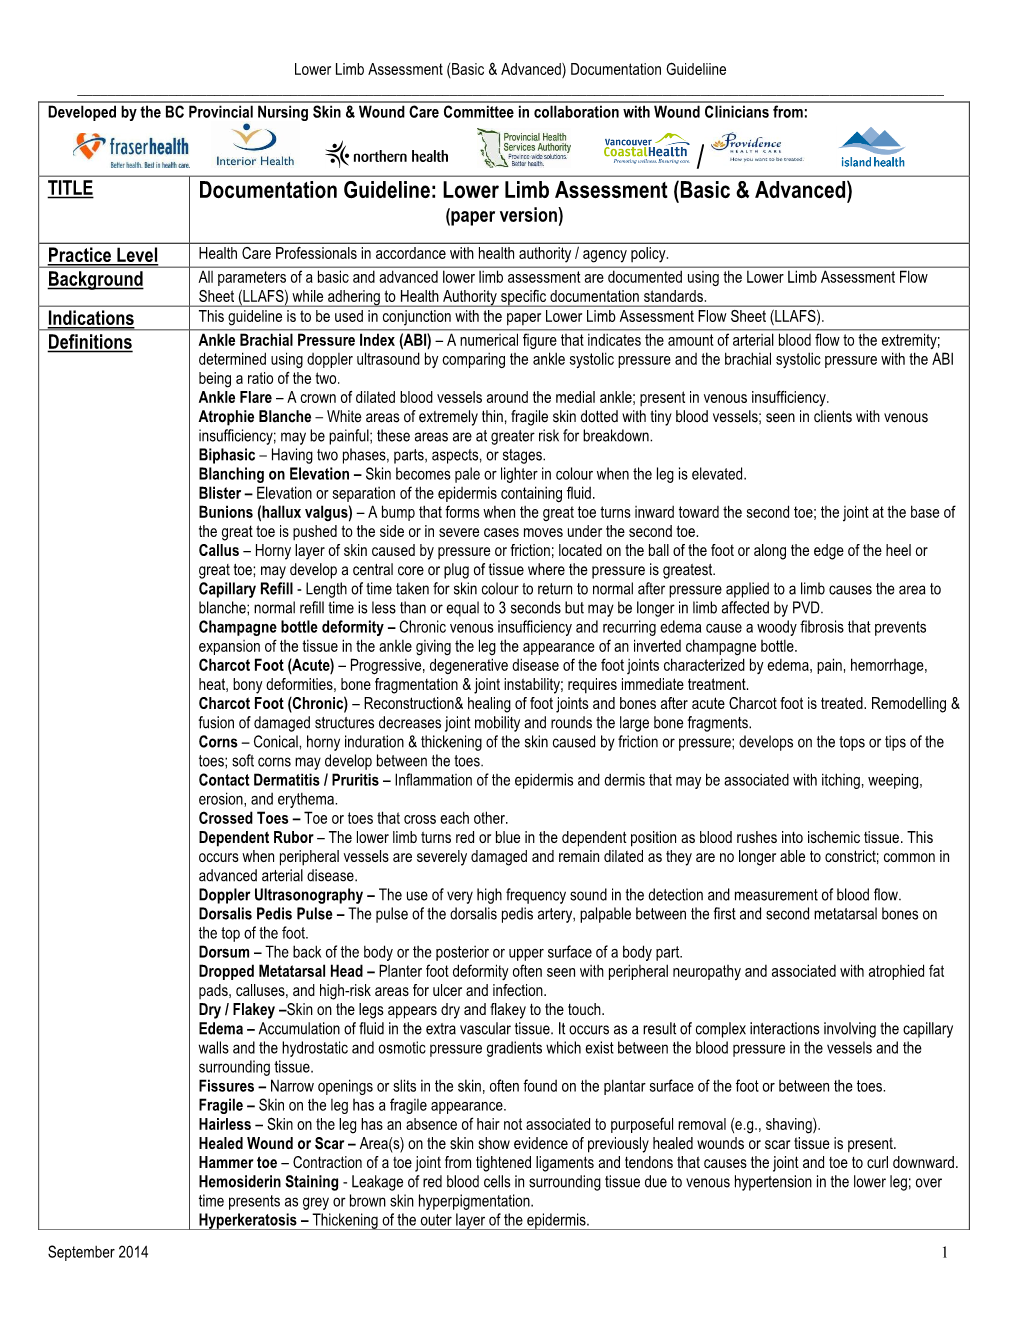 Documentation Guideline: Lower Limb Assessment (Basic & Advanced) (Paper Version)